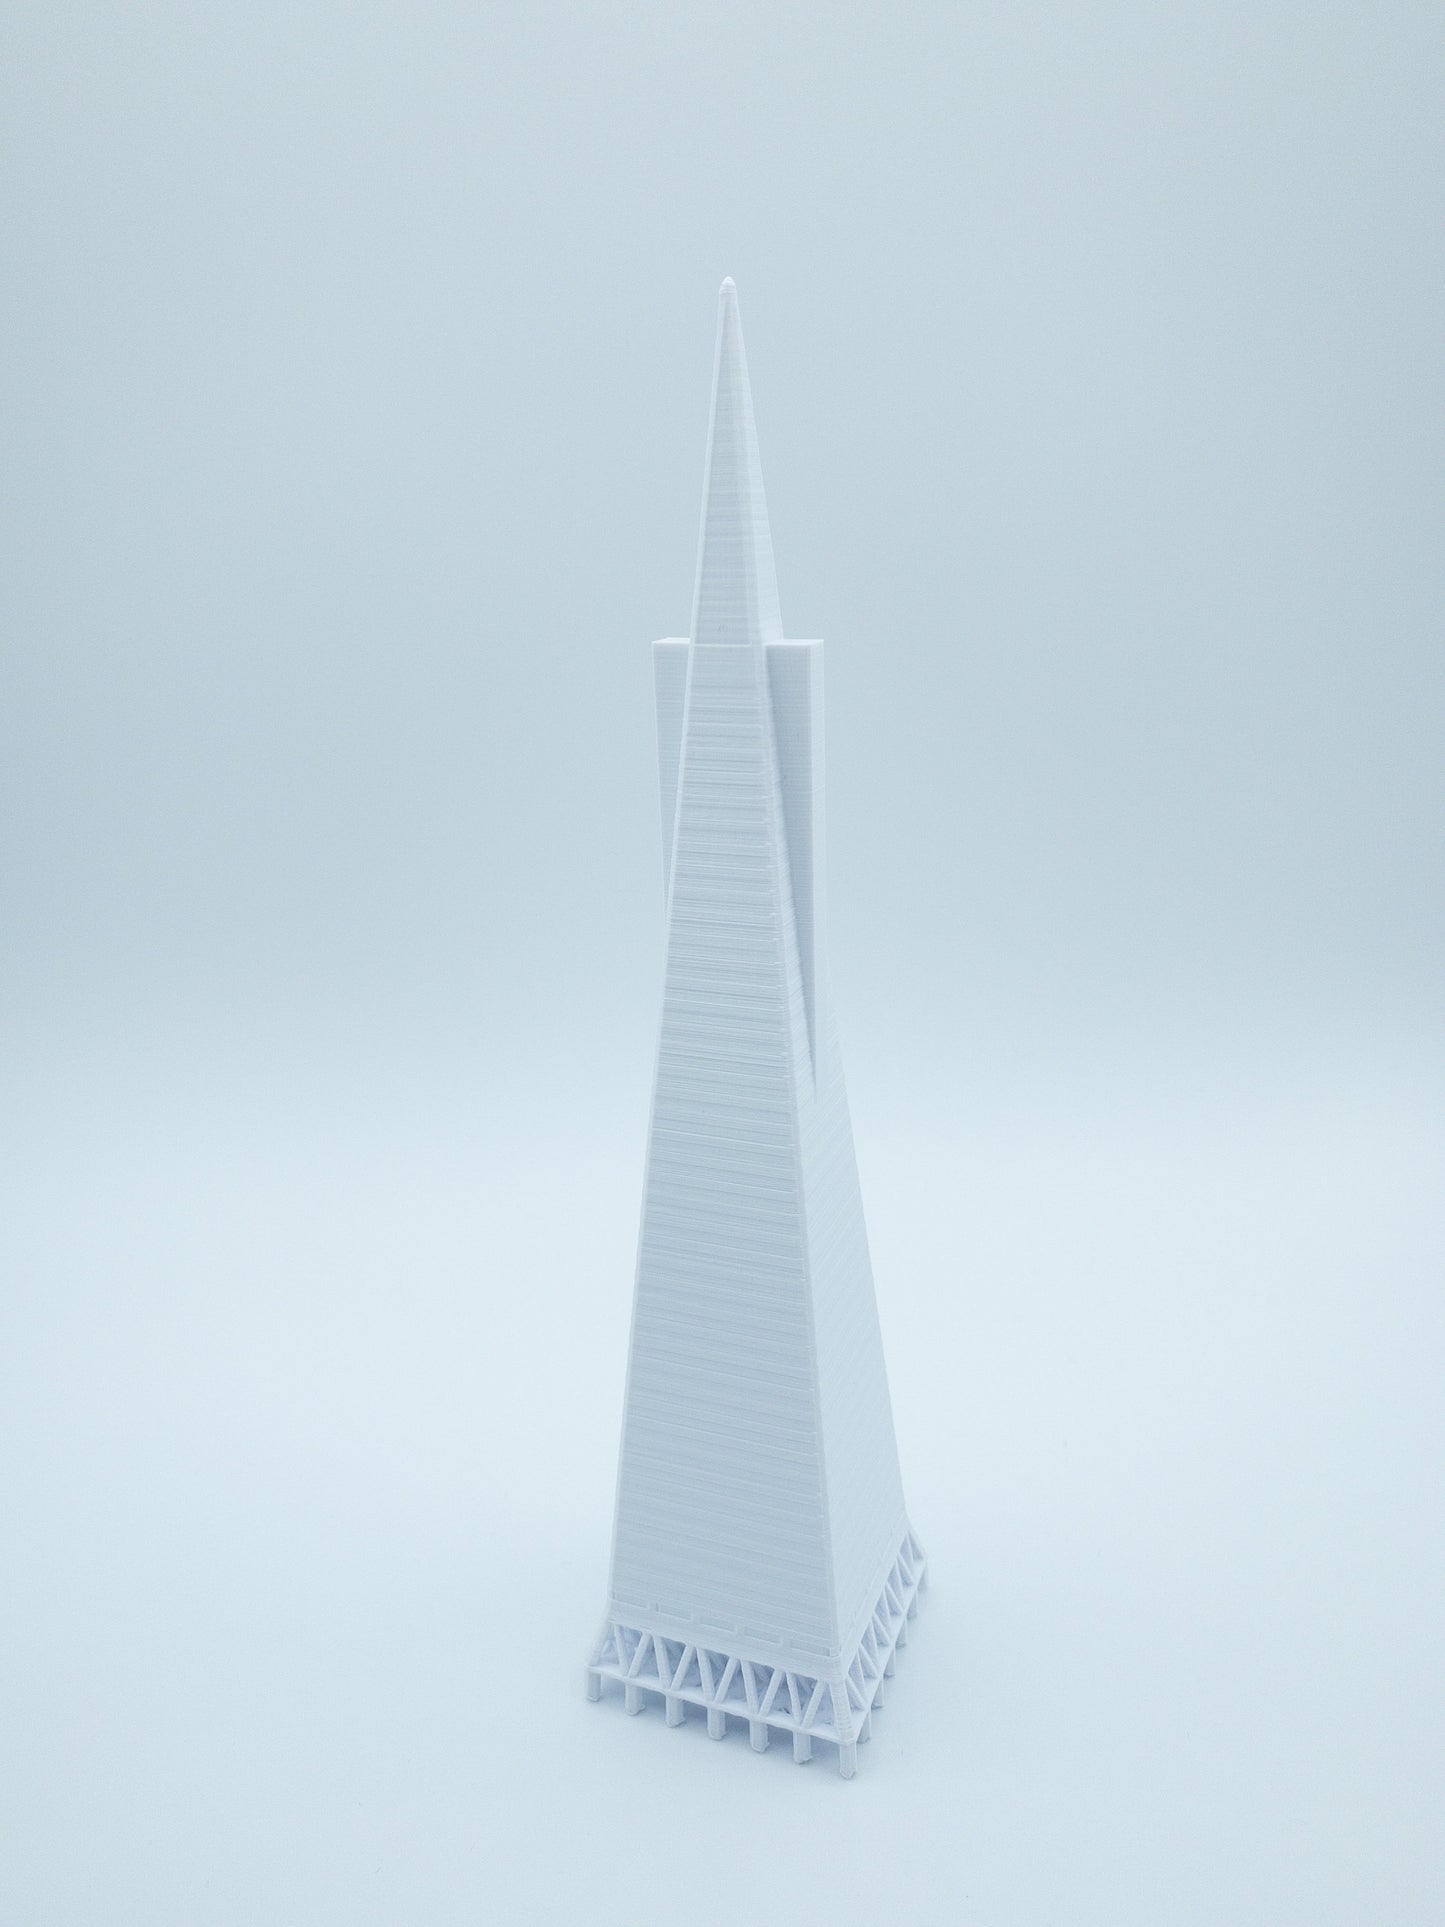 Transamerica Pyramid Model- 3D Printed